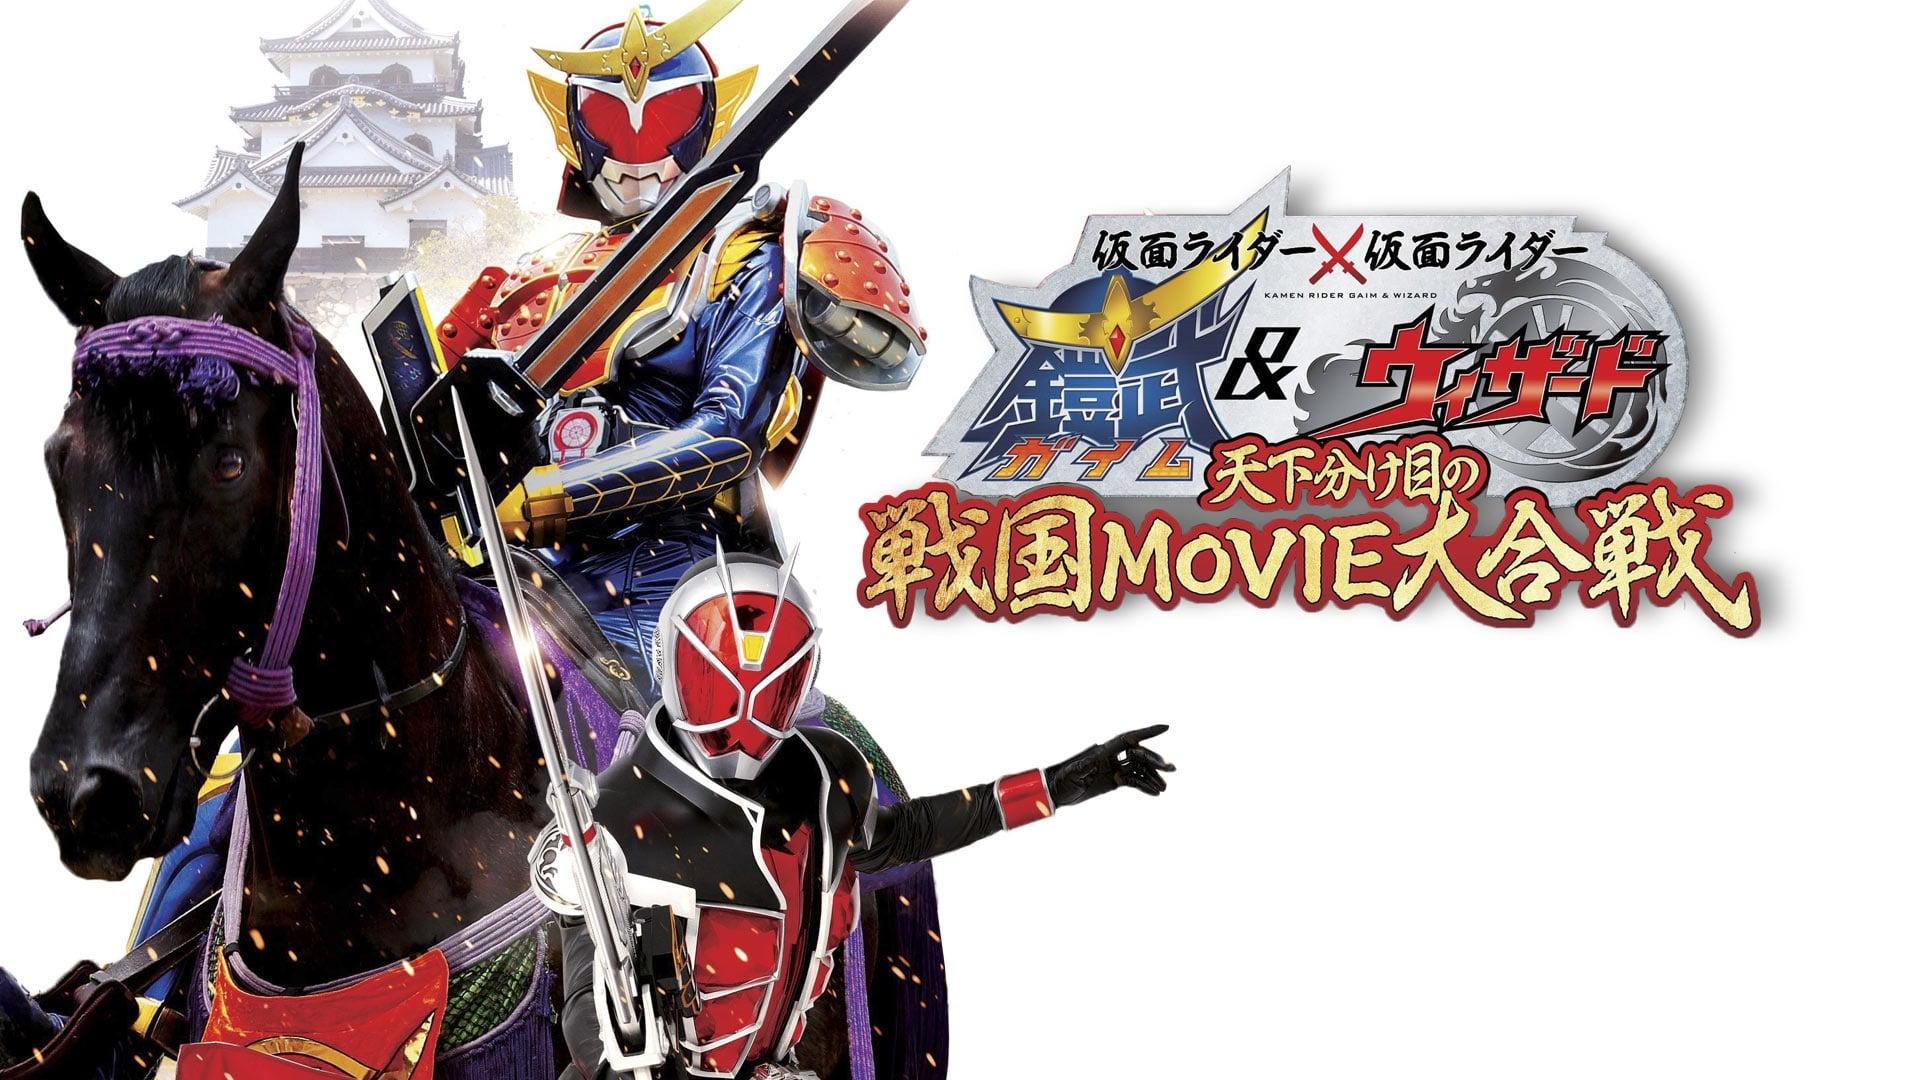 Kamen Rider × Kamen Rider Gaim & Wizard: The Fateful Feudal Movie Wars backdrop